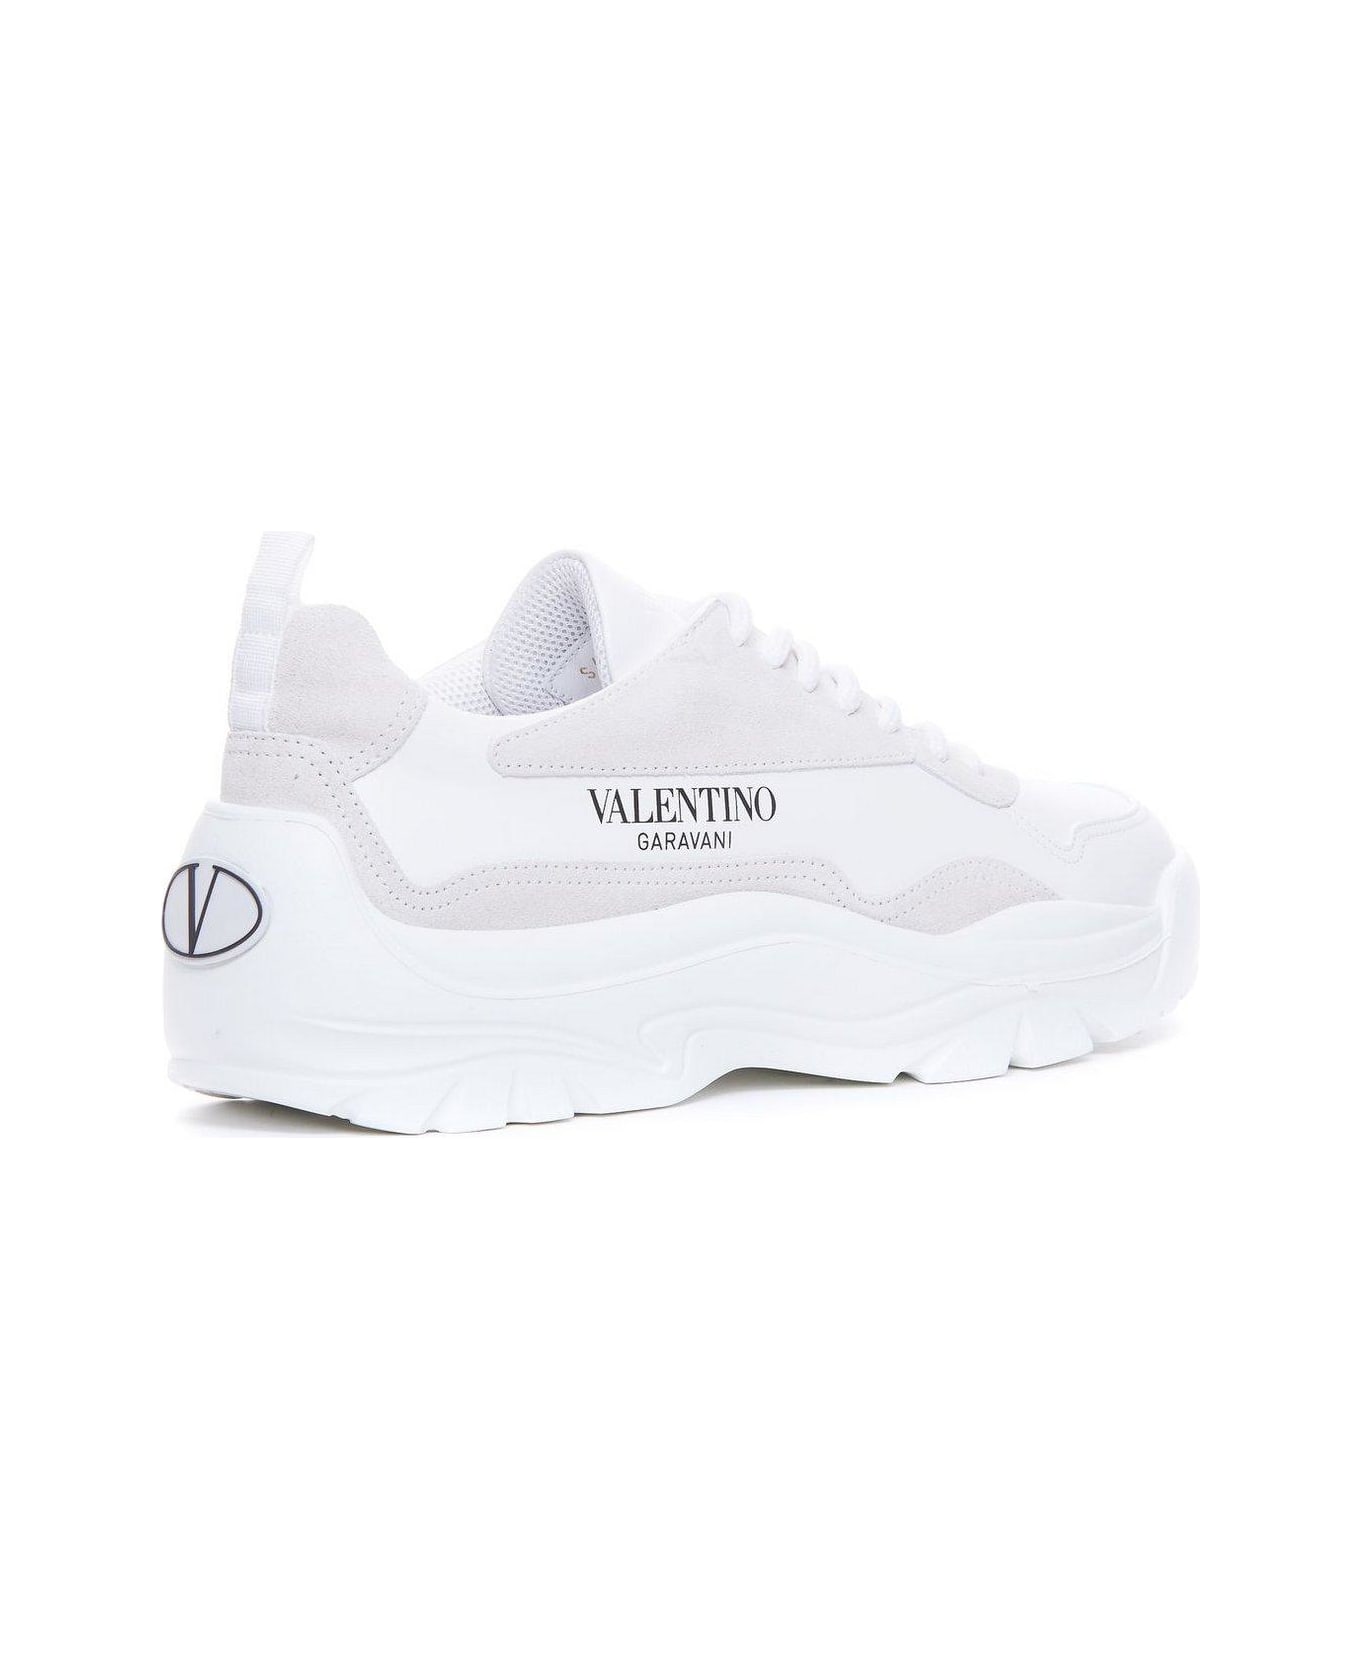 Valentino Garavani Gumboy Lace-up Sneakers - Bianco/bianco/bianco スニーカー